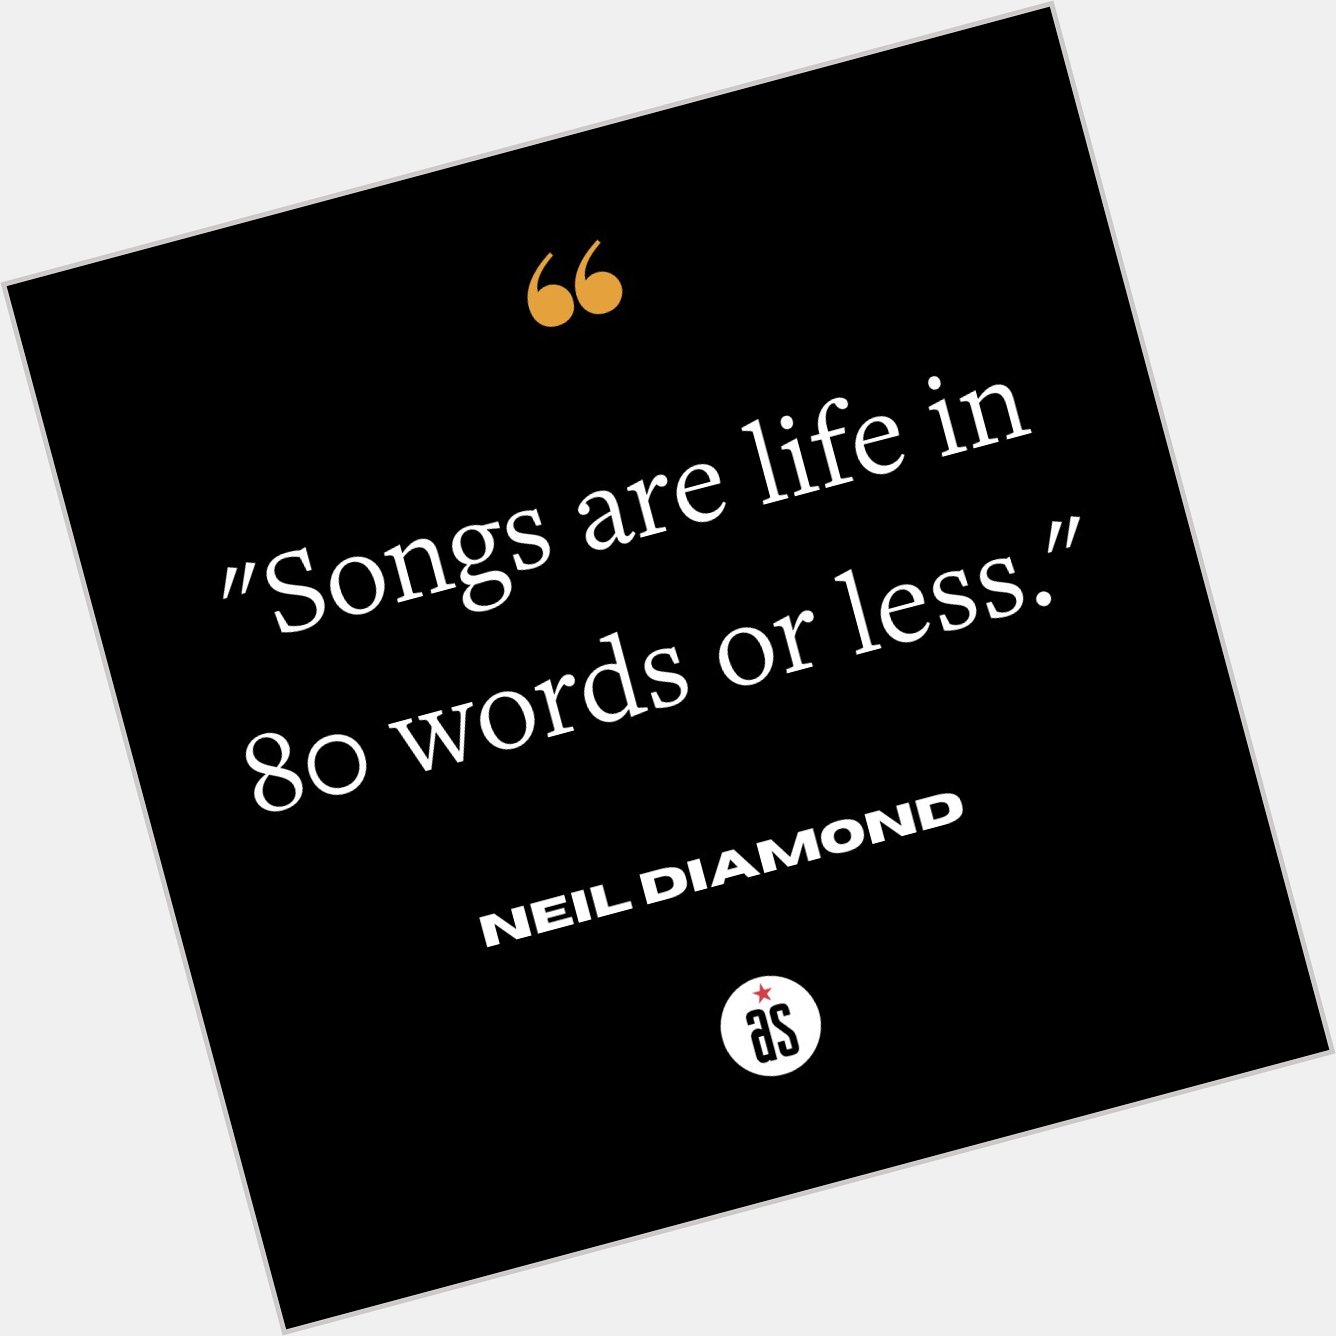 Happy happy birthday to Neil Diamond! 